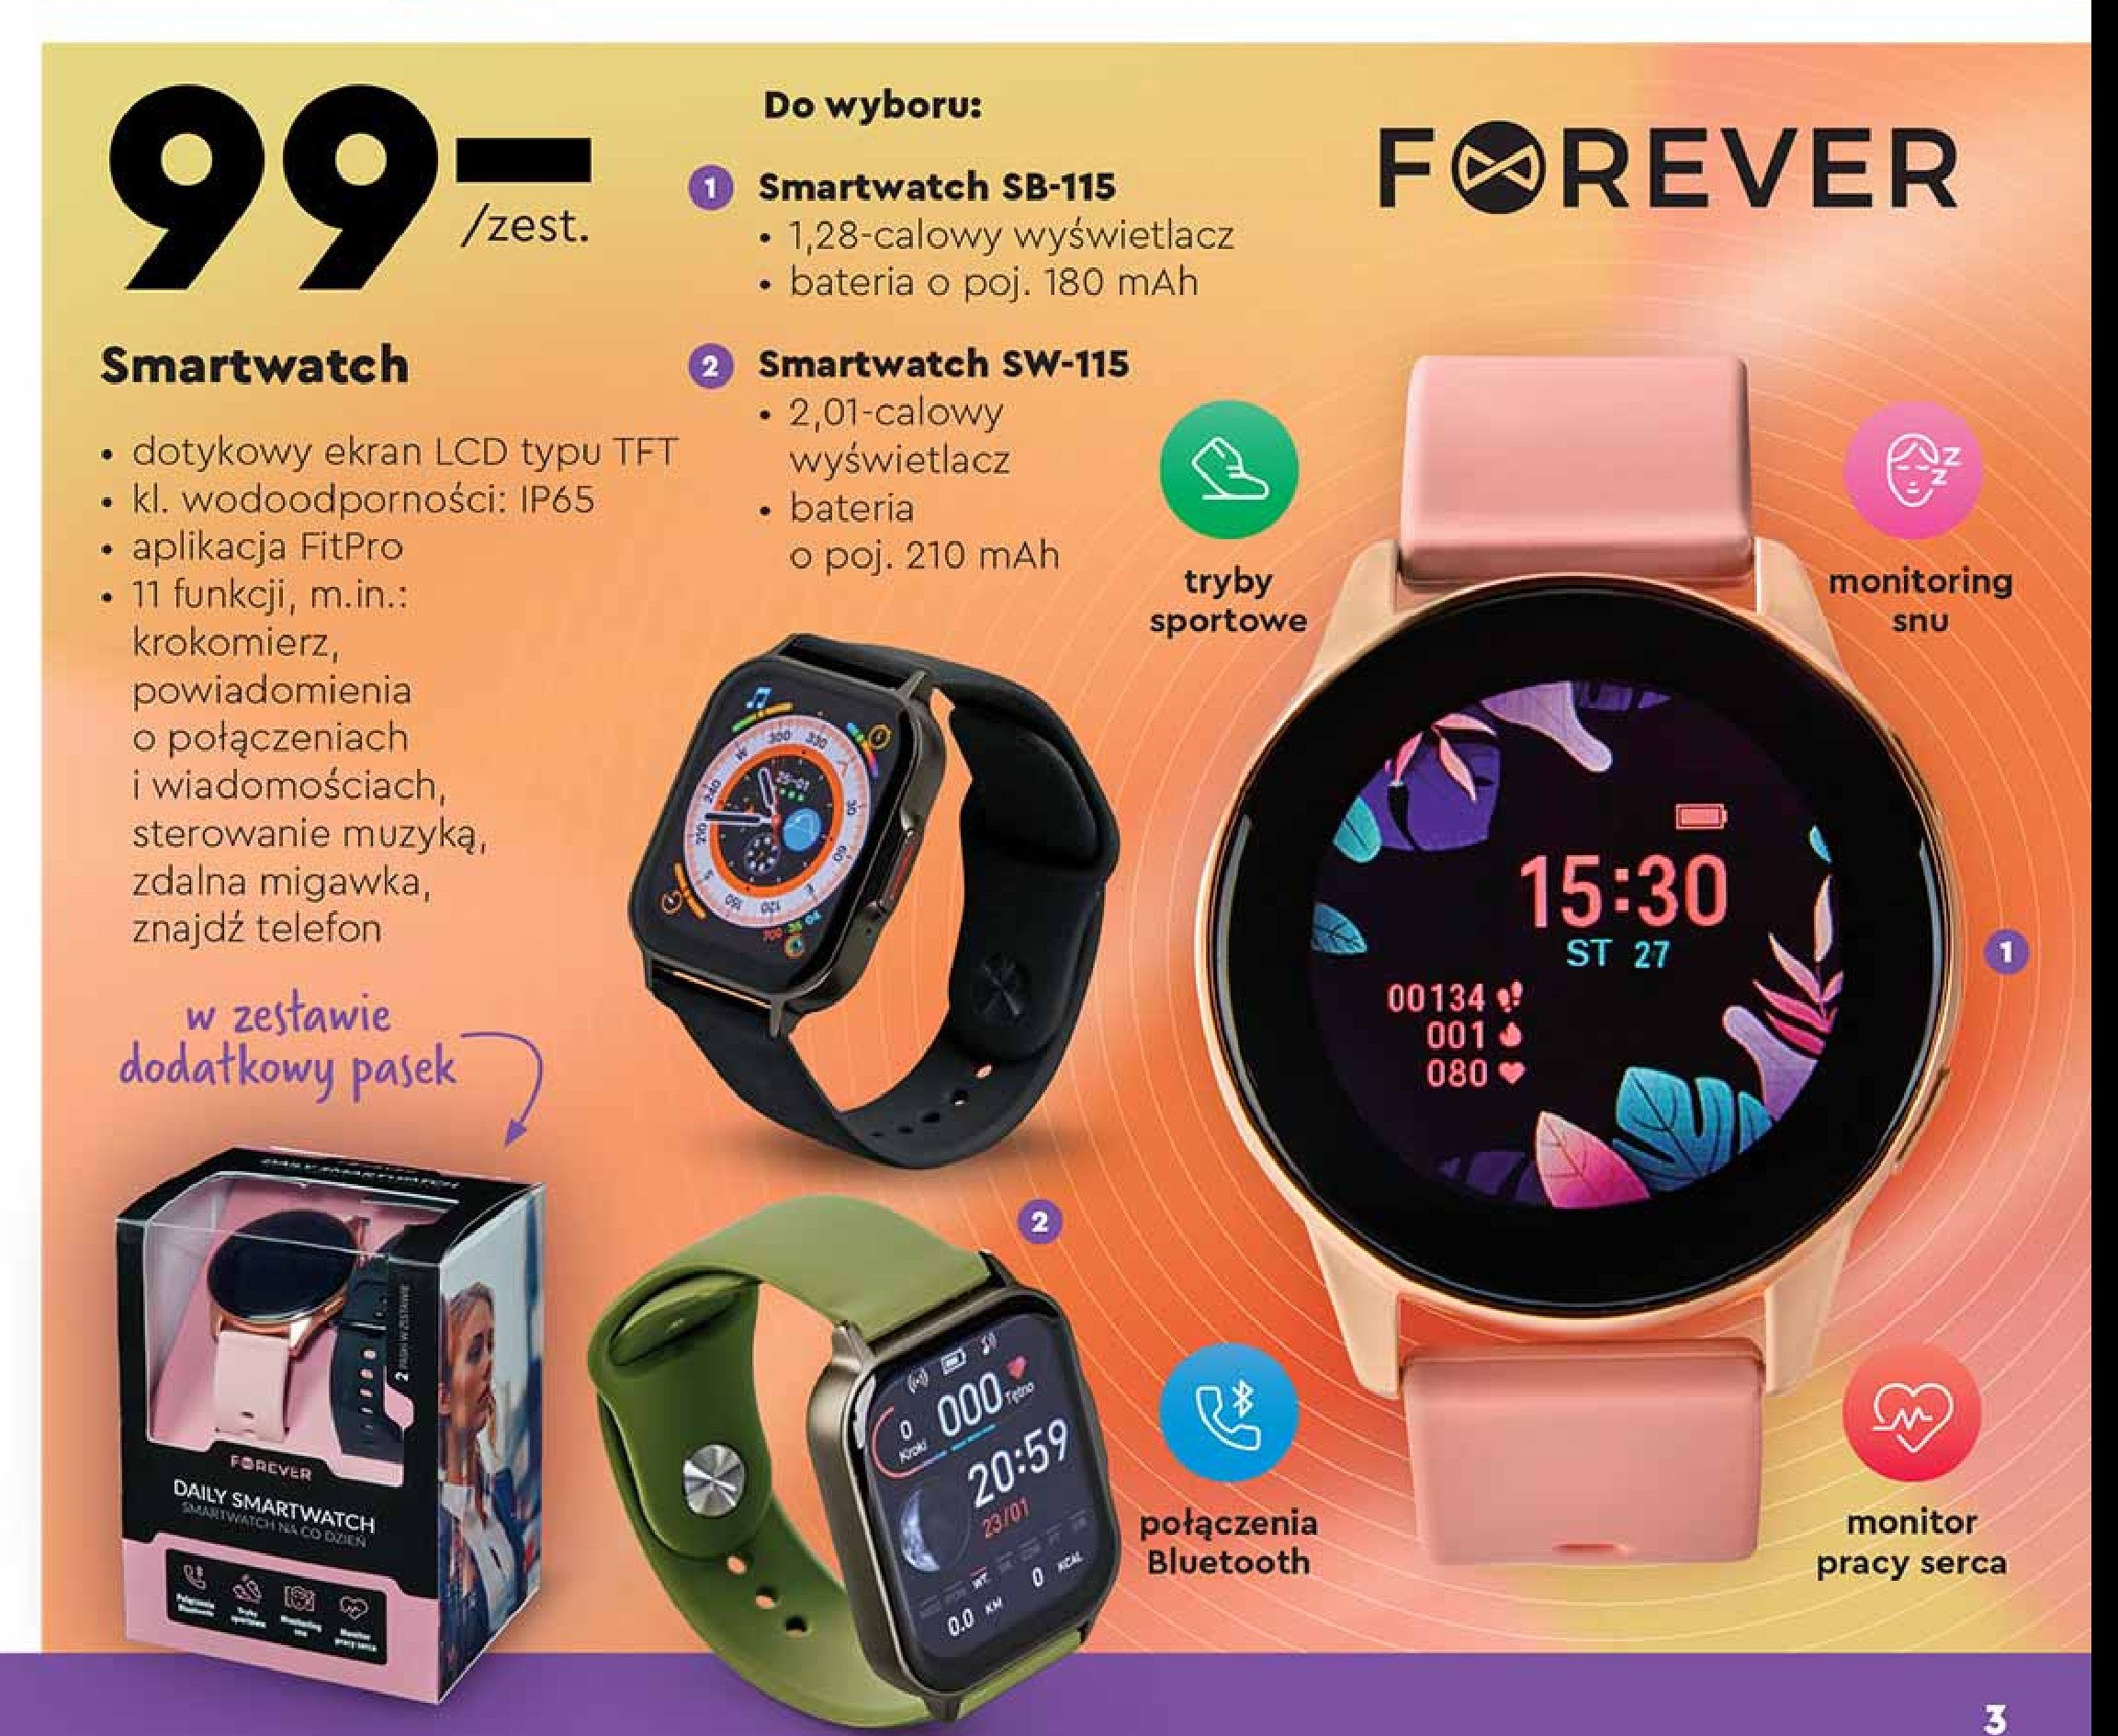 Smartwatch sb-115 Forever promocja